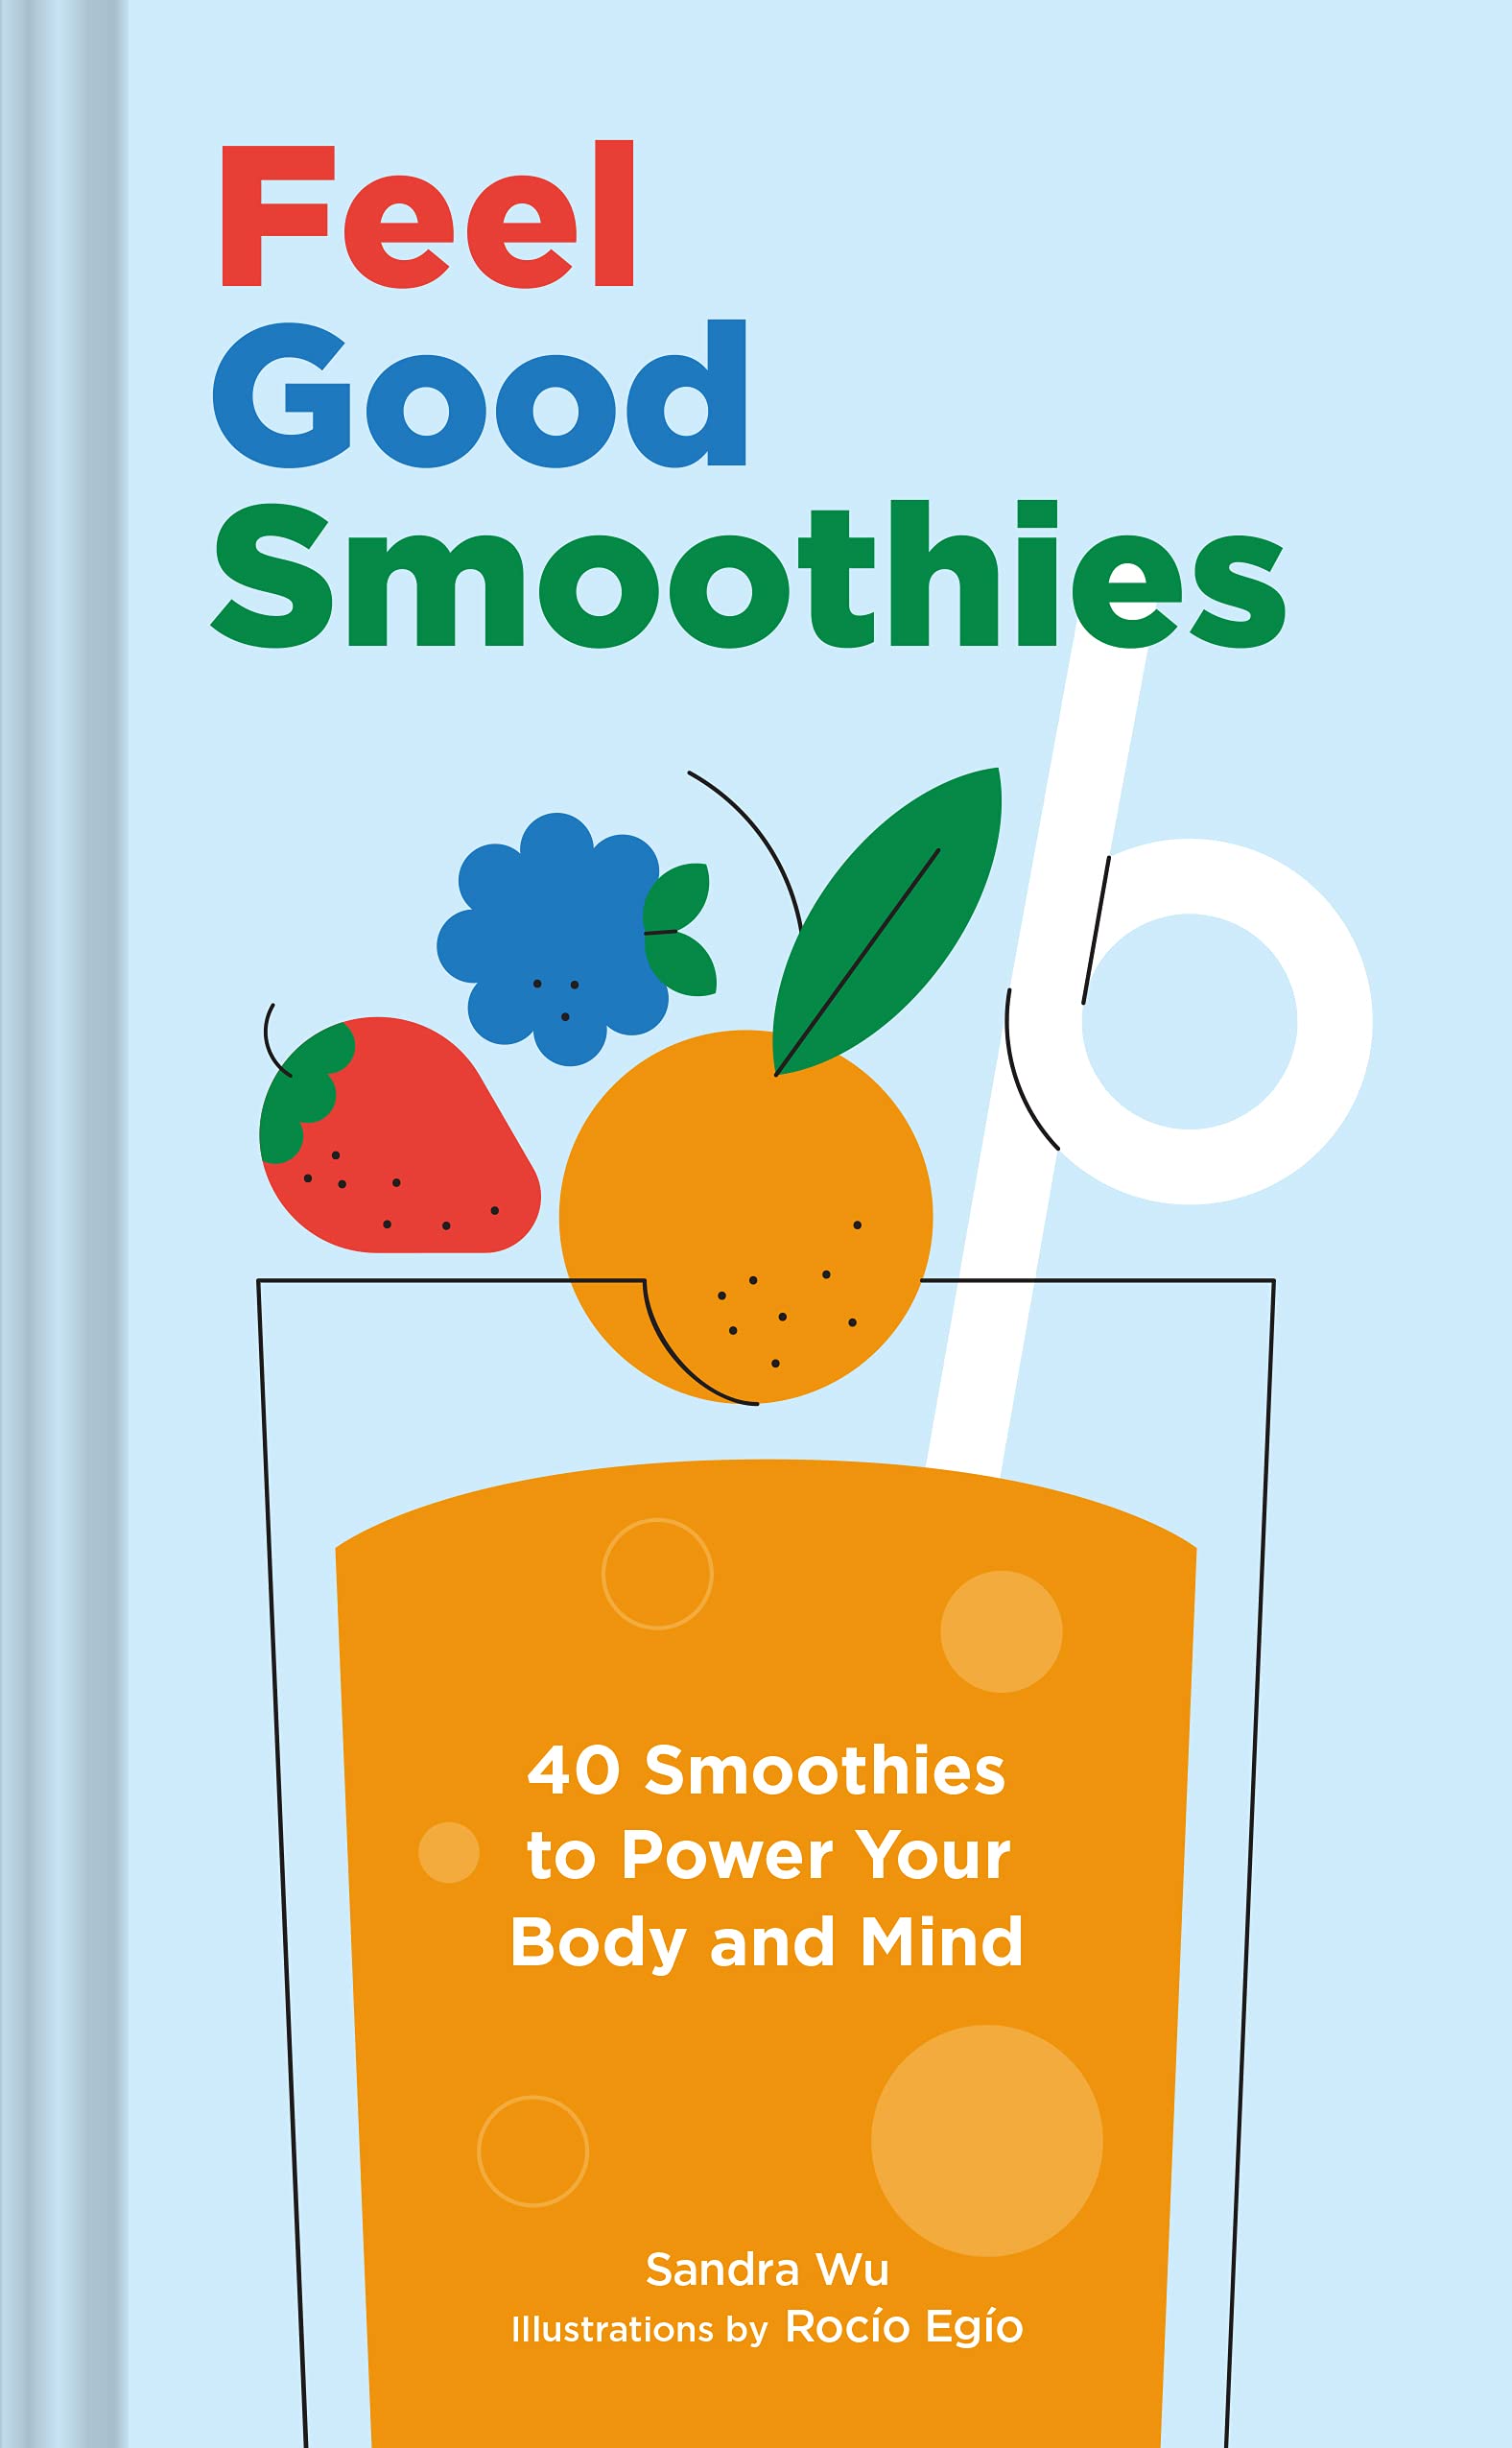 Feel Good Smoothies: 40 Smoothies to Power Your Body and Mind (Sandra Wu, Rocio Egio)